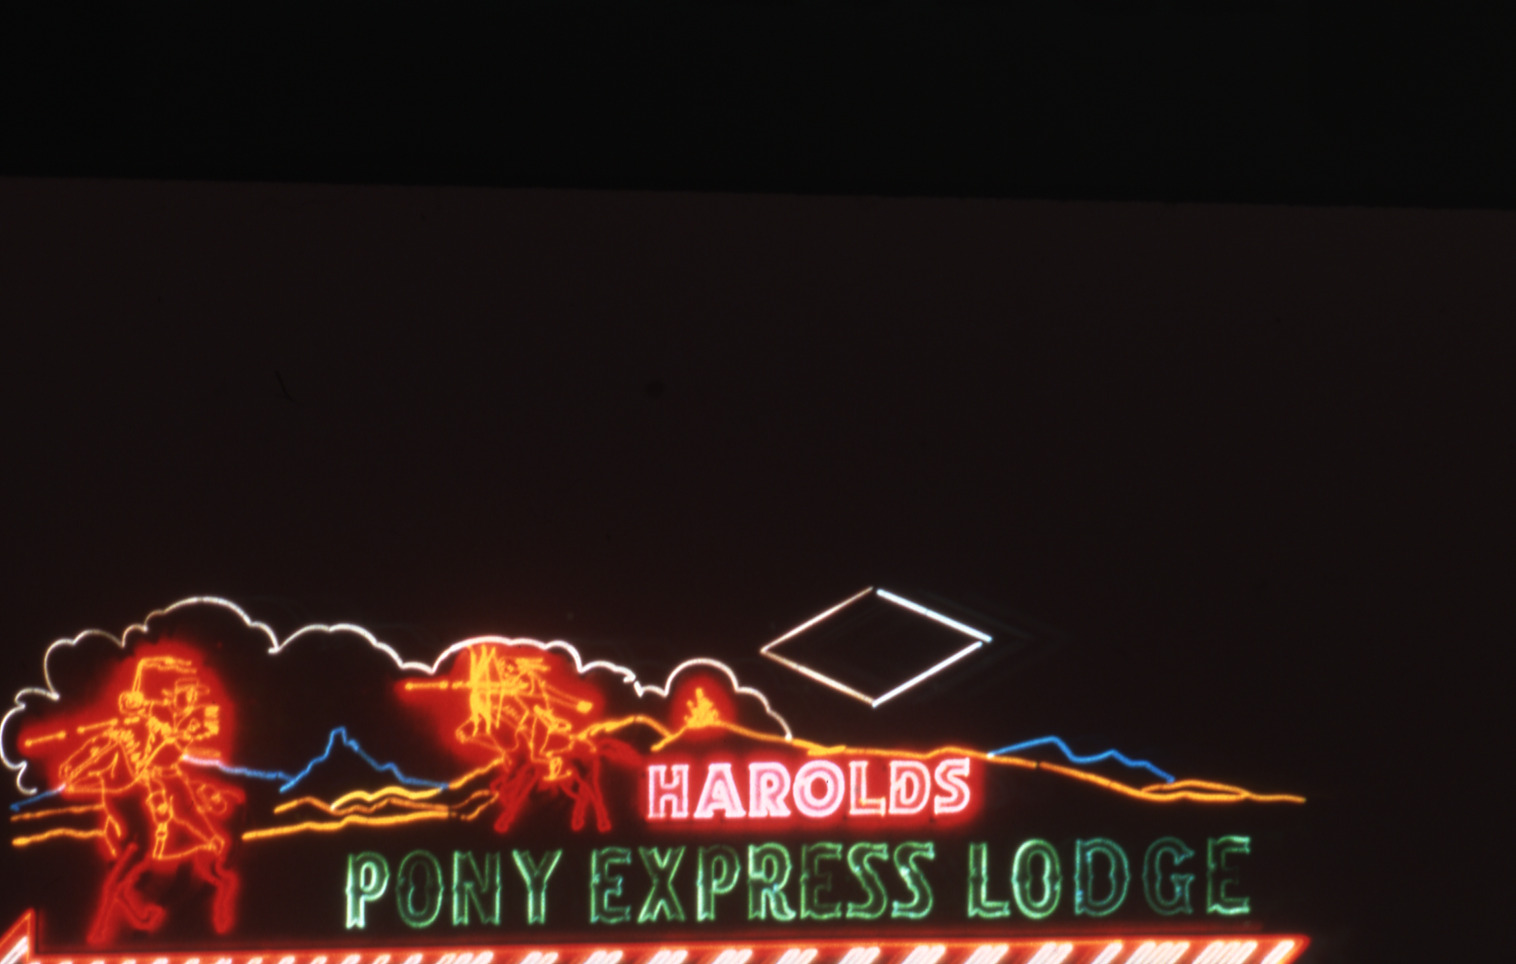 Harold's Pony Express Lodge sign, Sparks, Nevada: photographic print